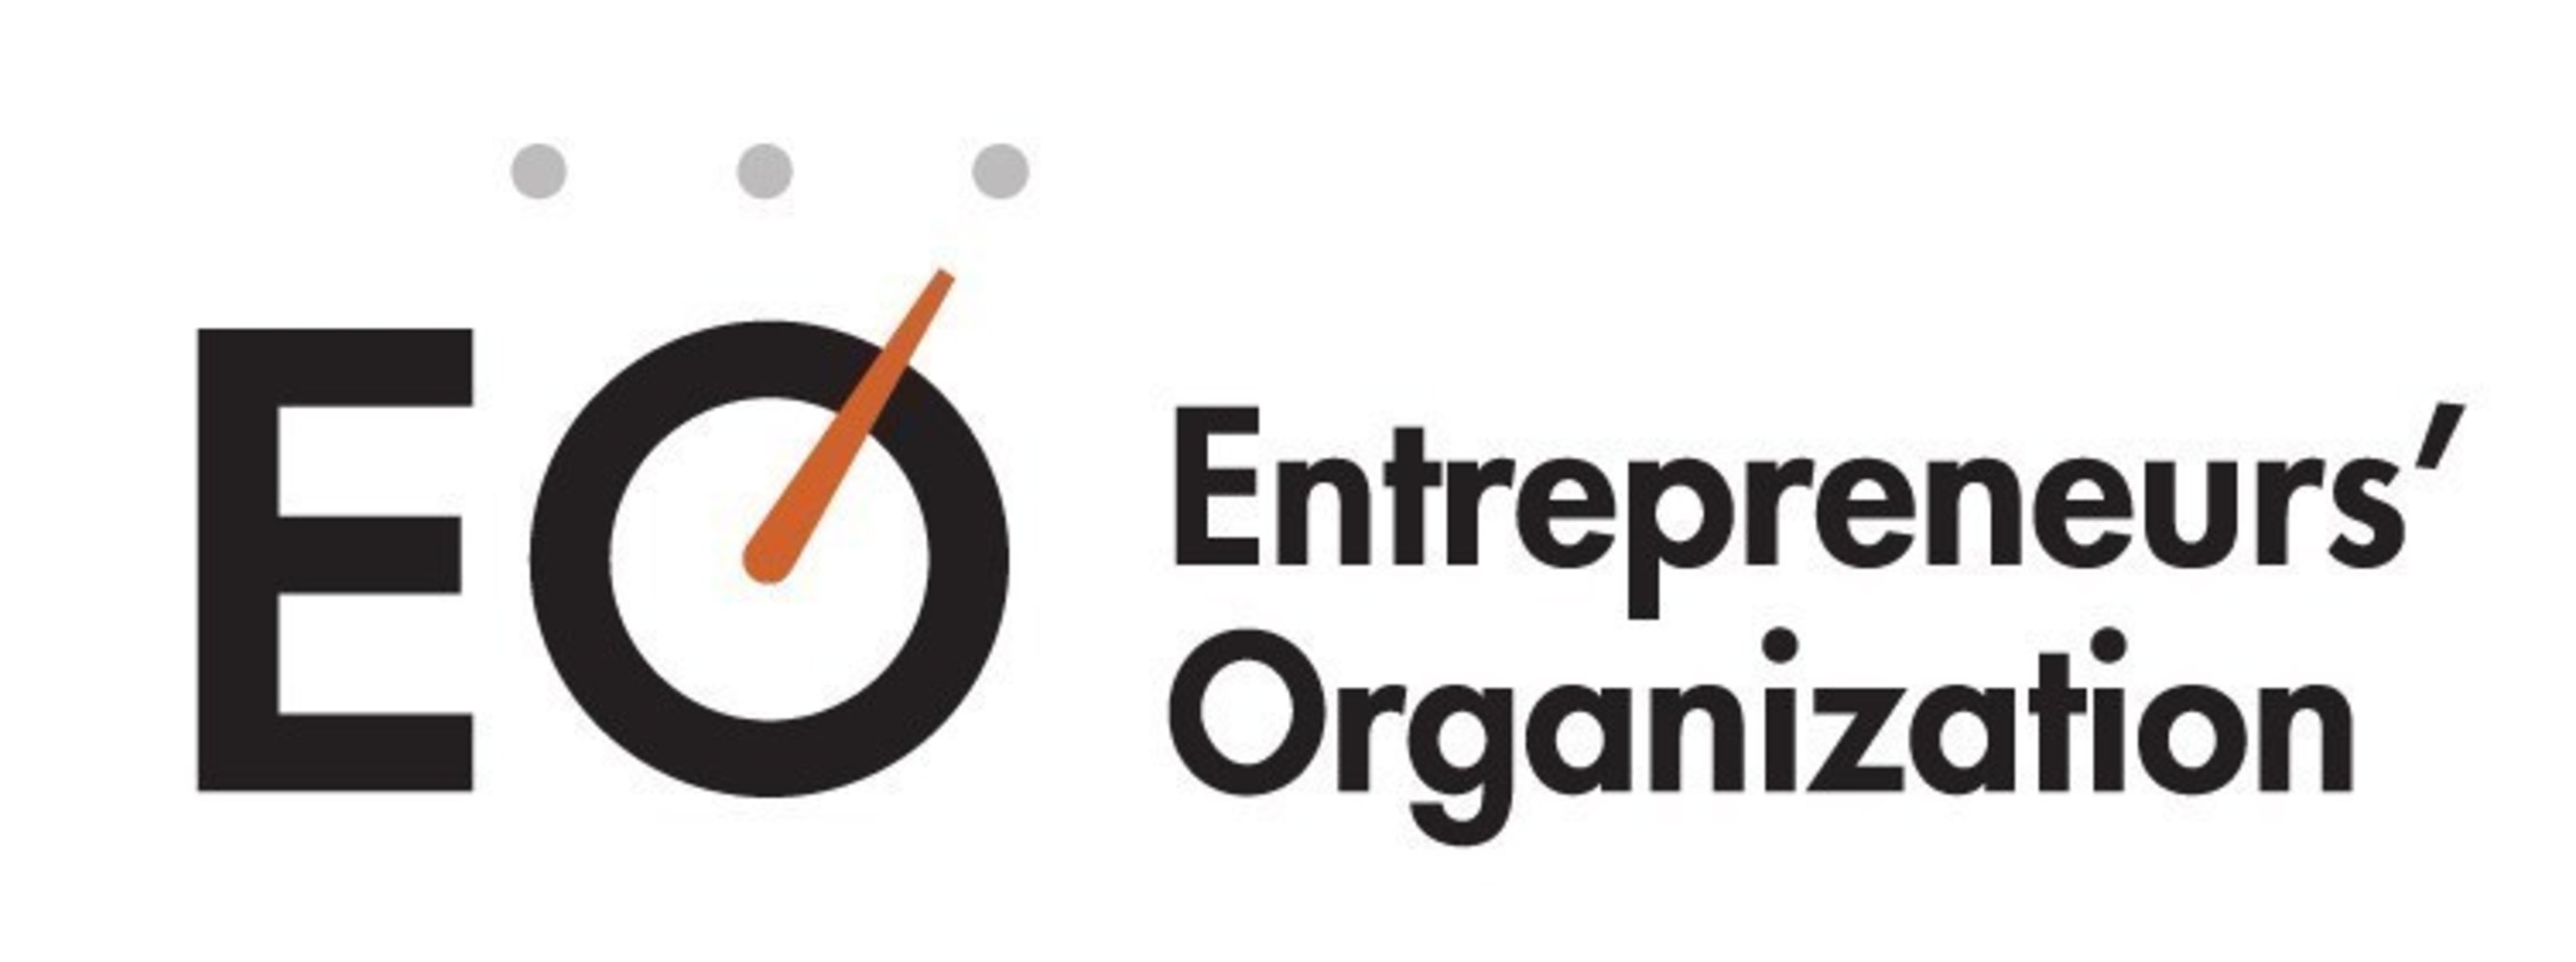 Entrepreneurs Organization - YouTube